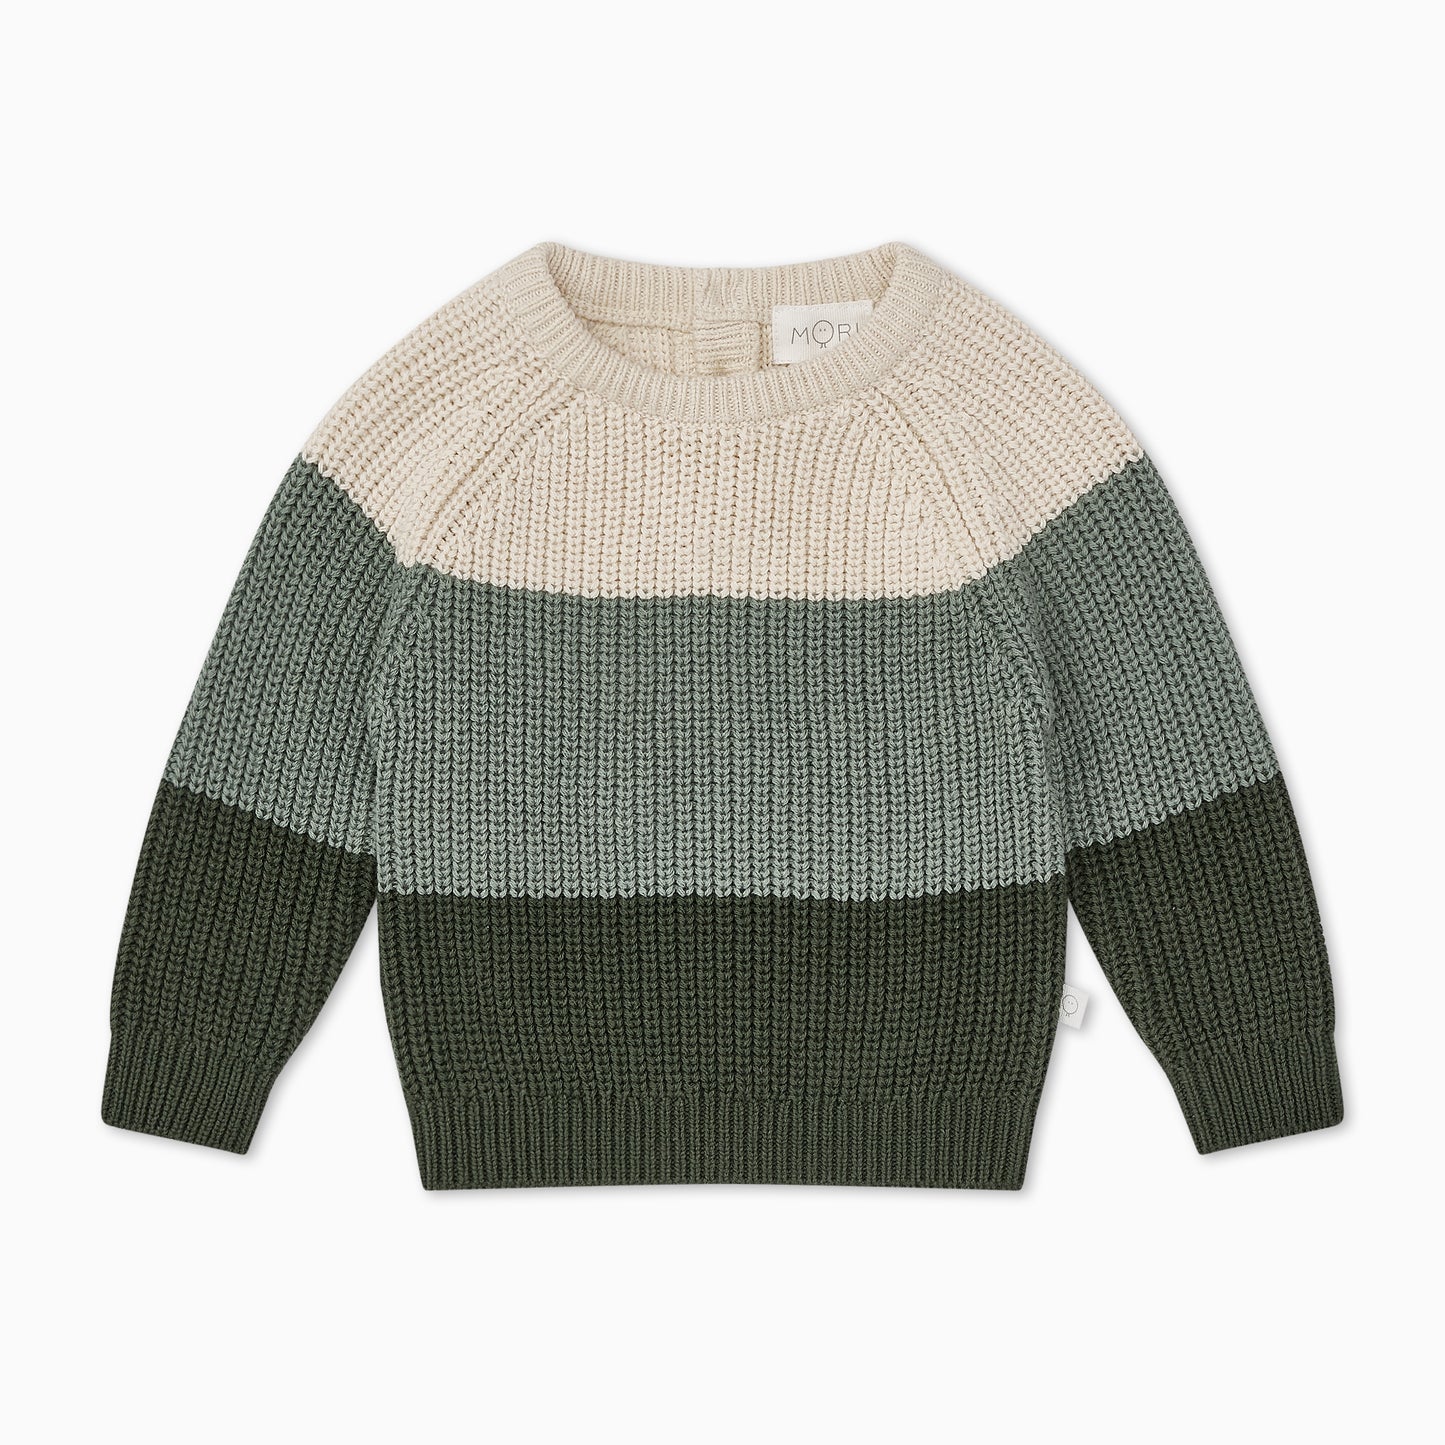 Chunky knit colourblock jumper - green